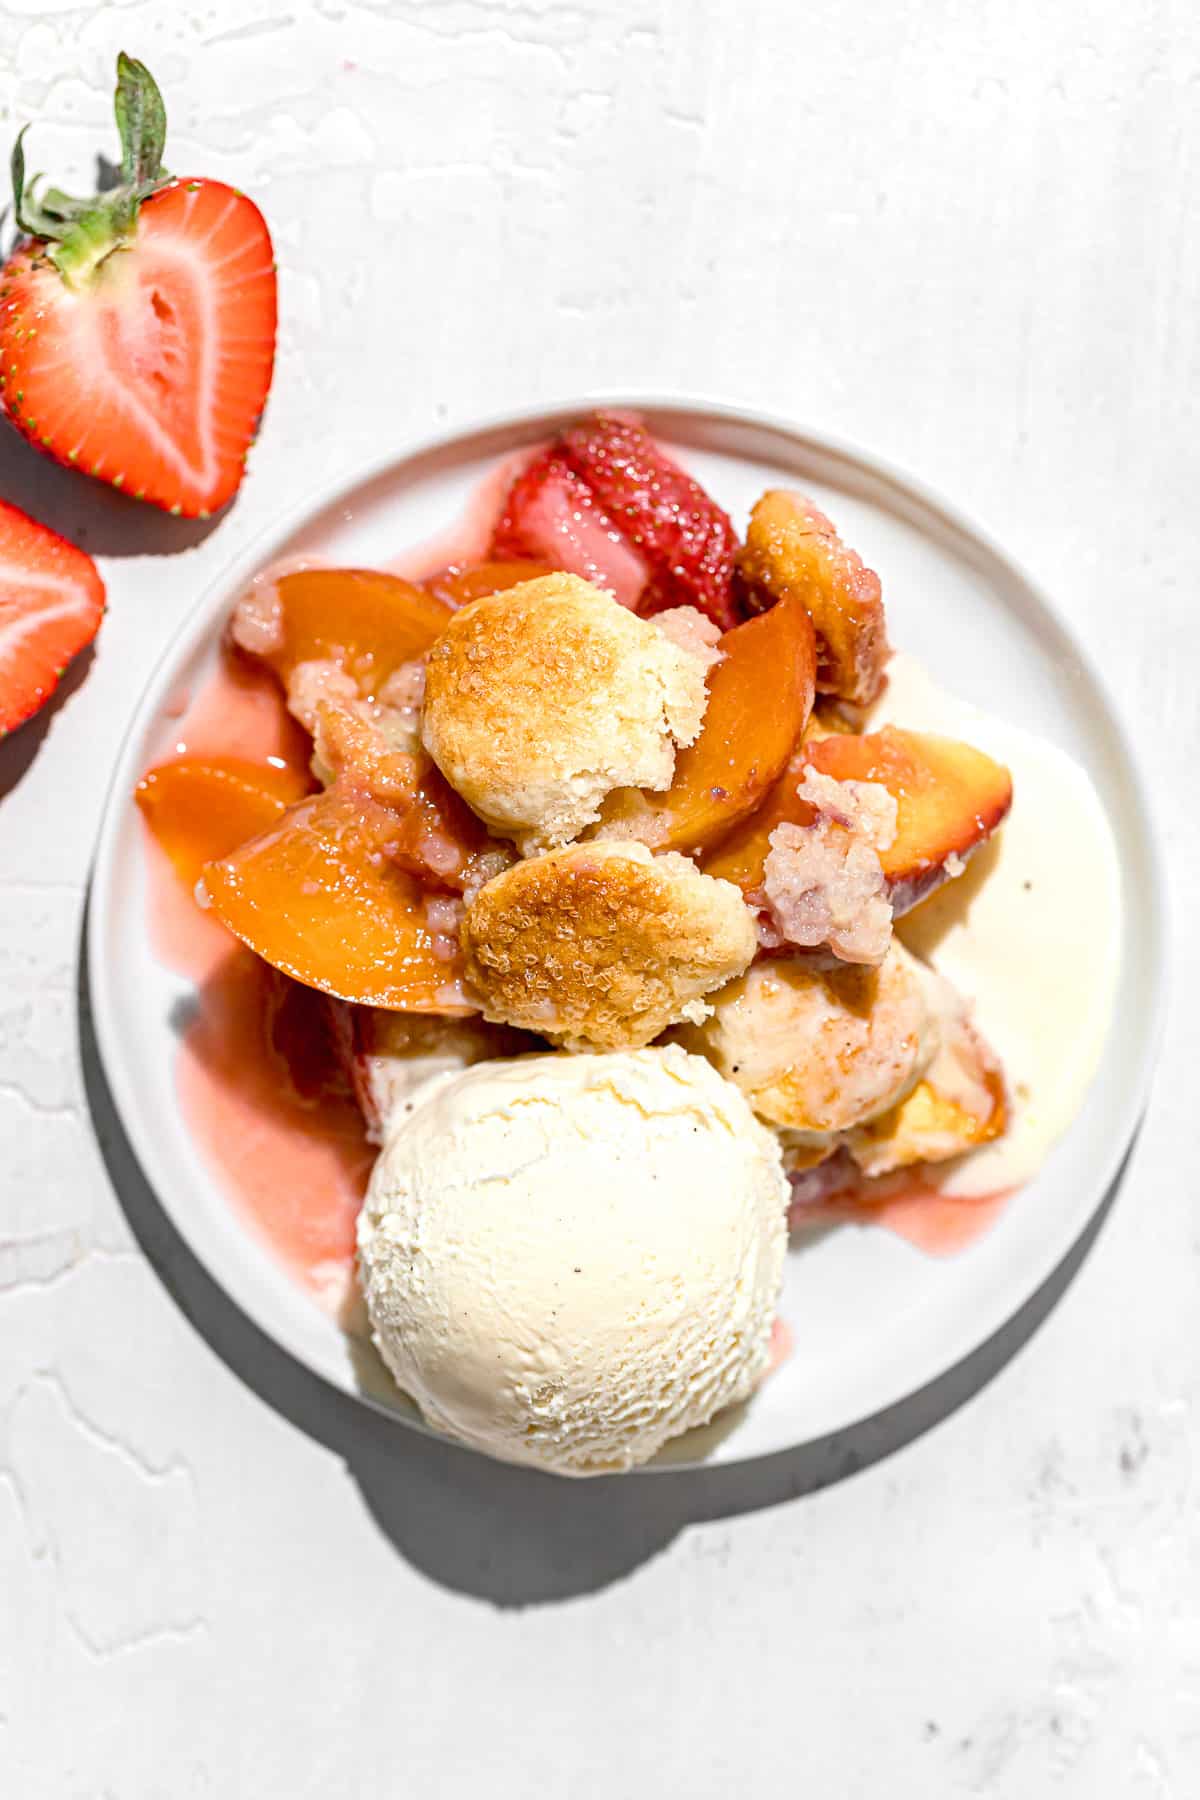 strawberry peach cobbler spooned onto plate with scoop of vanilla ice cream